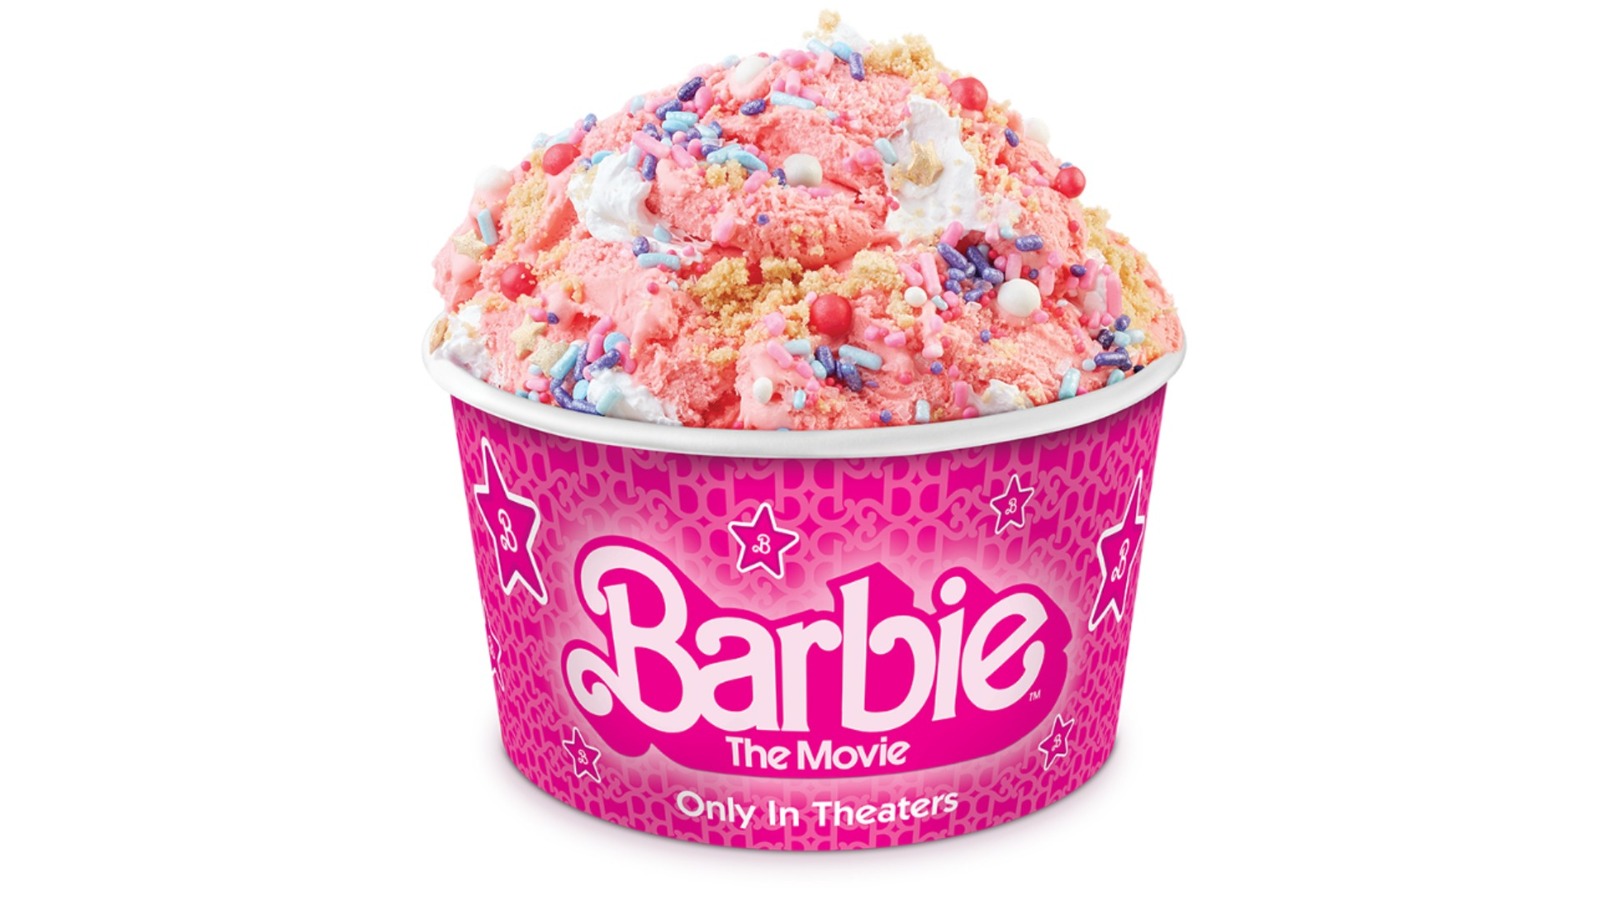 Barbie - Ice Cream Color Reveal Doll